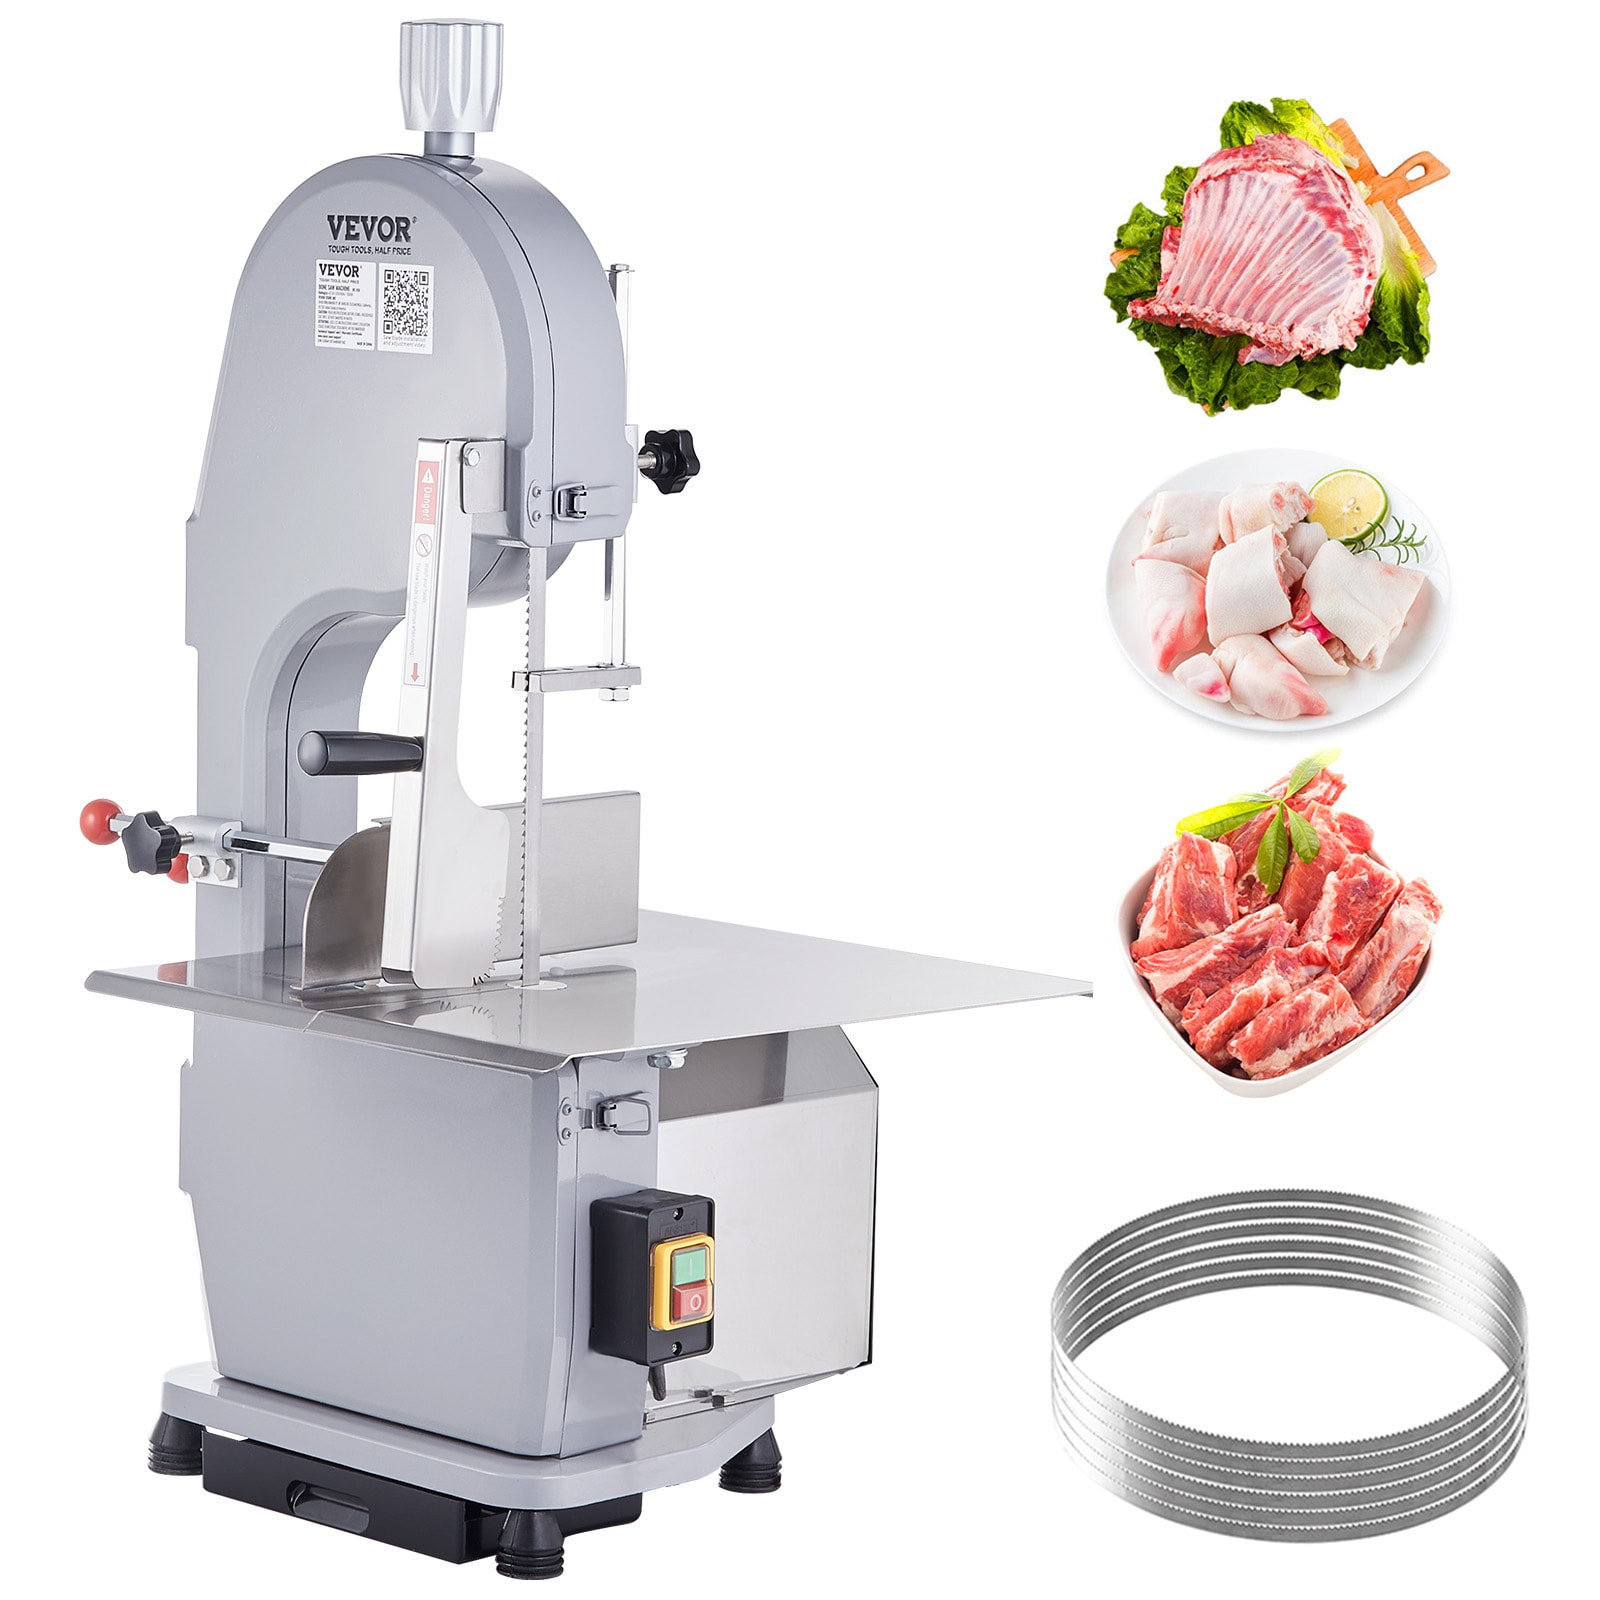 VEVOR 1500 W Meat Bone Cutting Machine Commercial/Residential Food Slicer Stainless Steel | JGJJG-21000000001V1